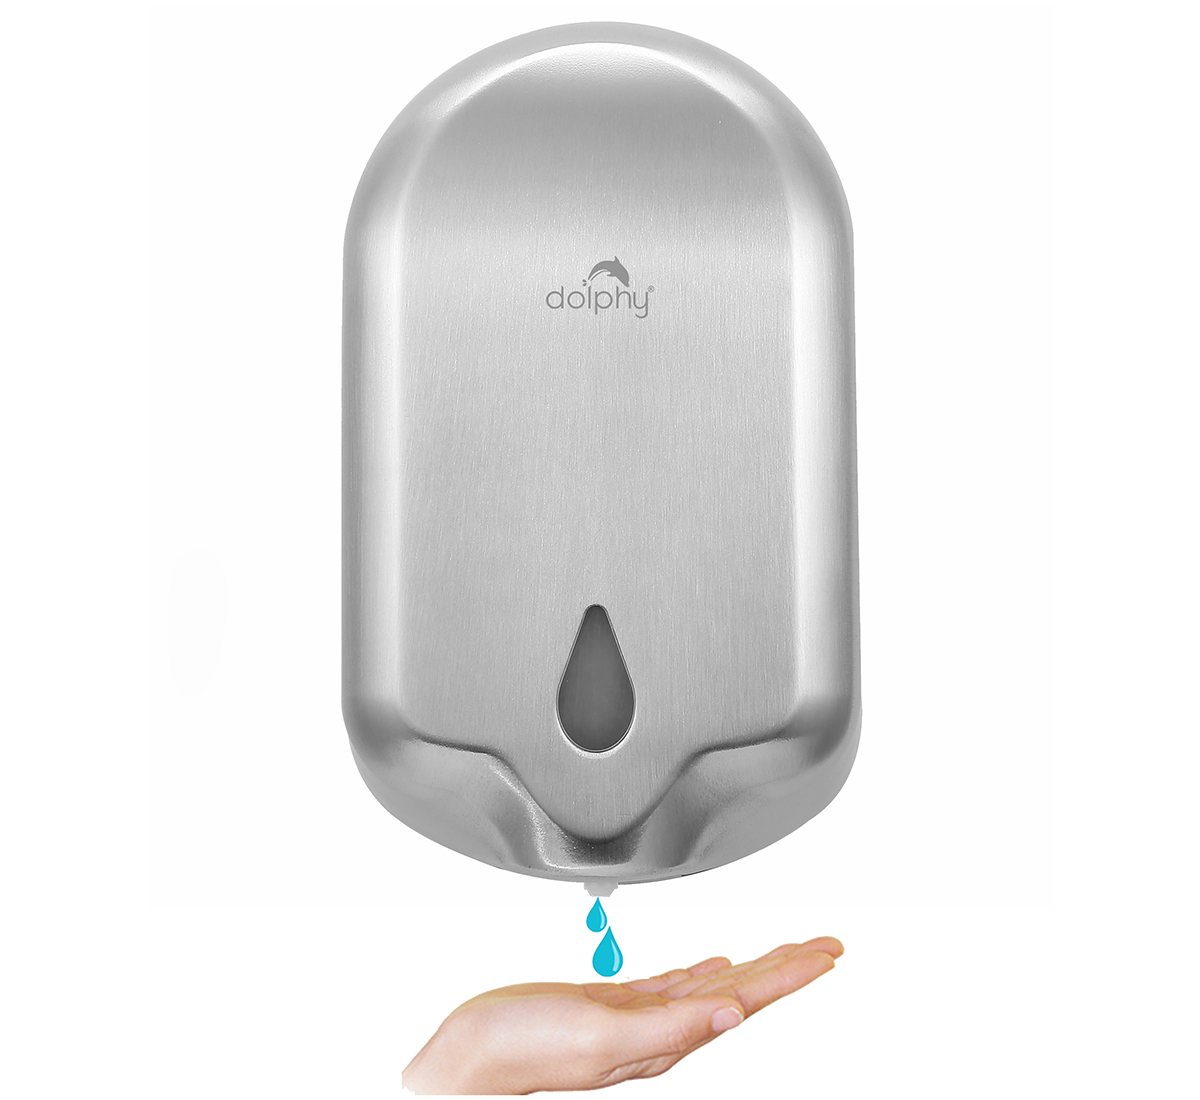 Silver automatic soap dispenser with matte finish